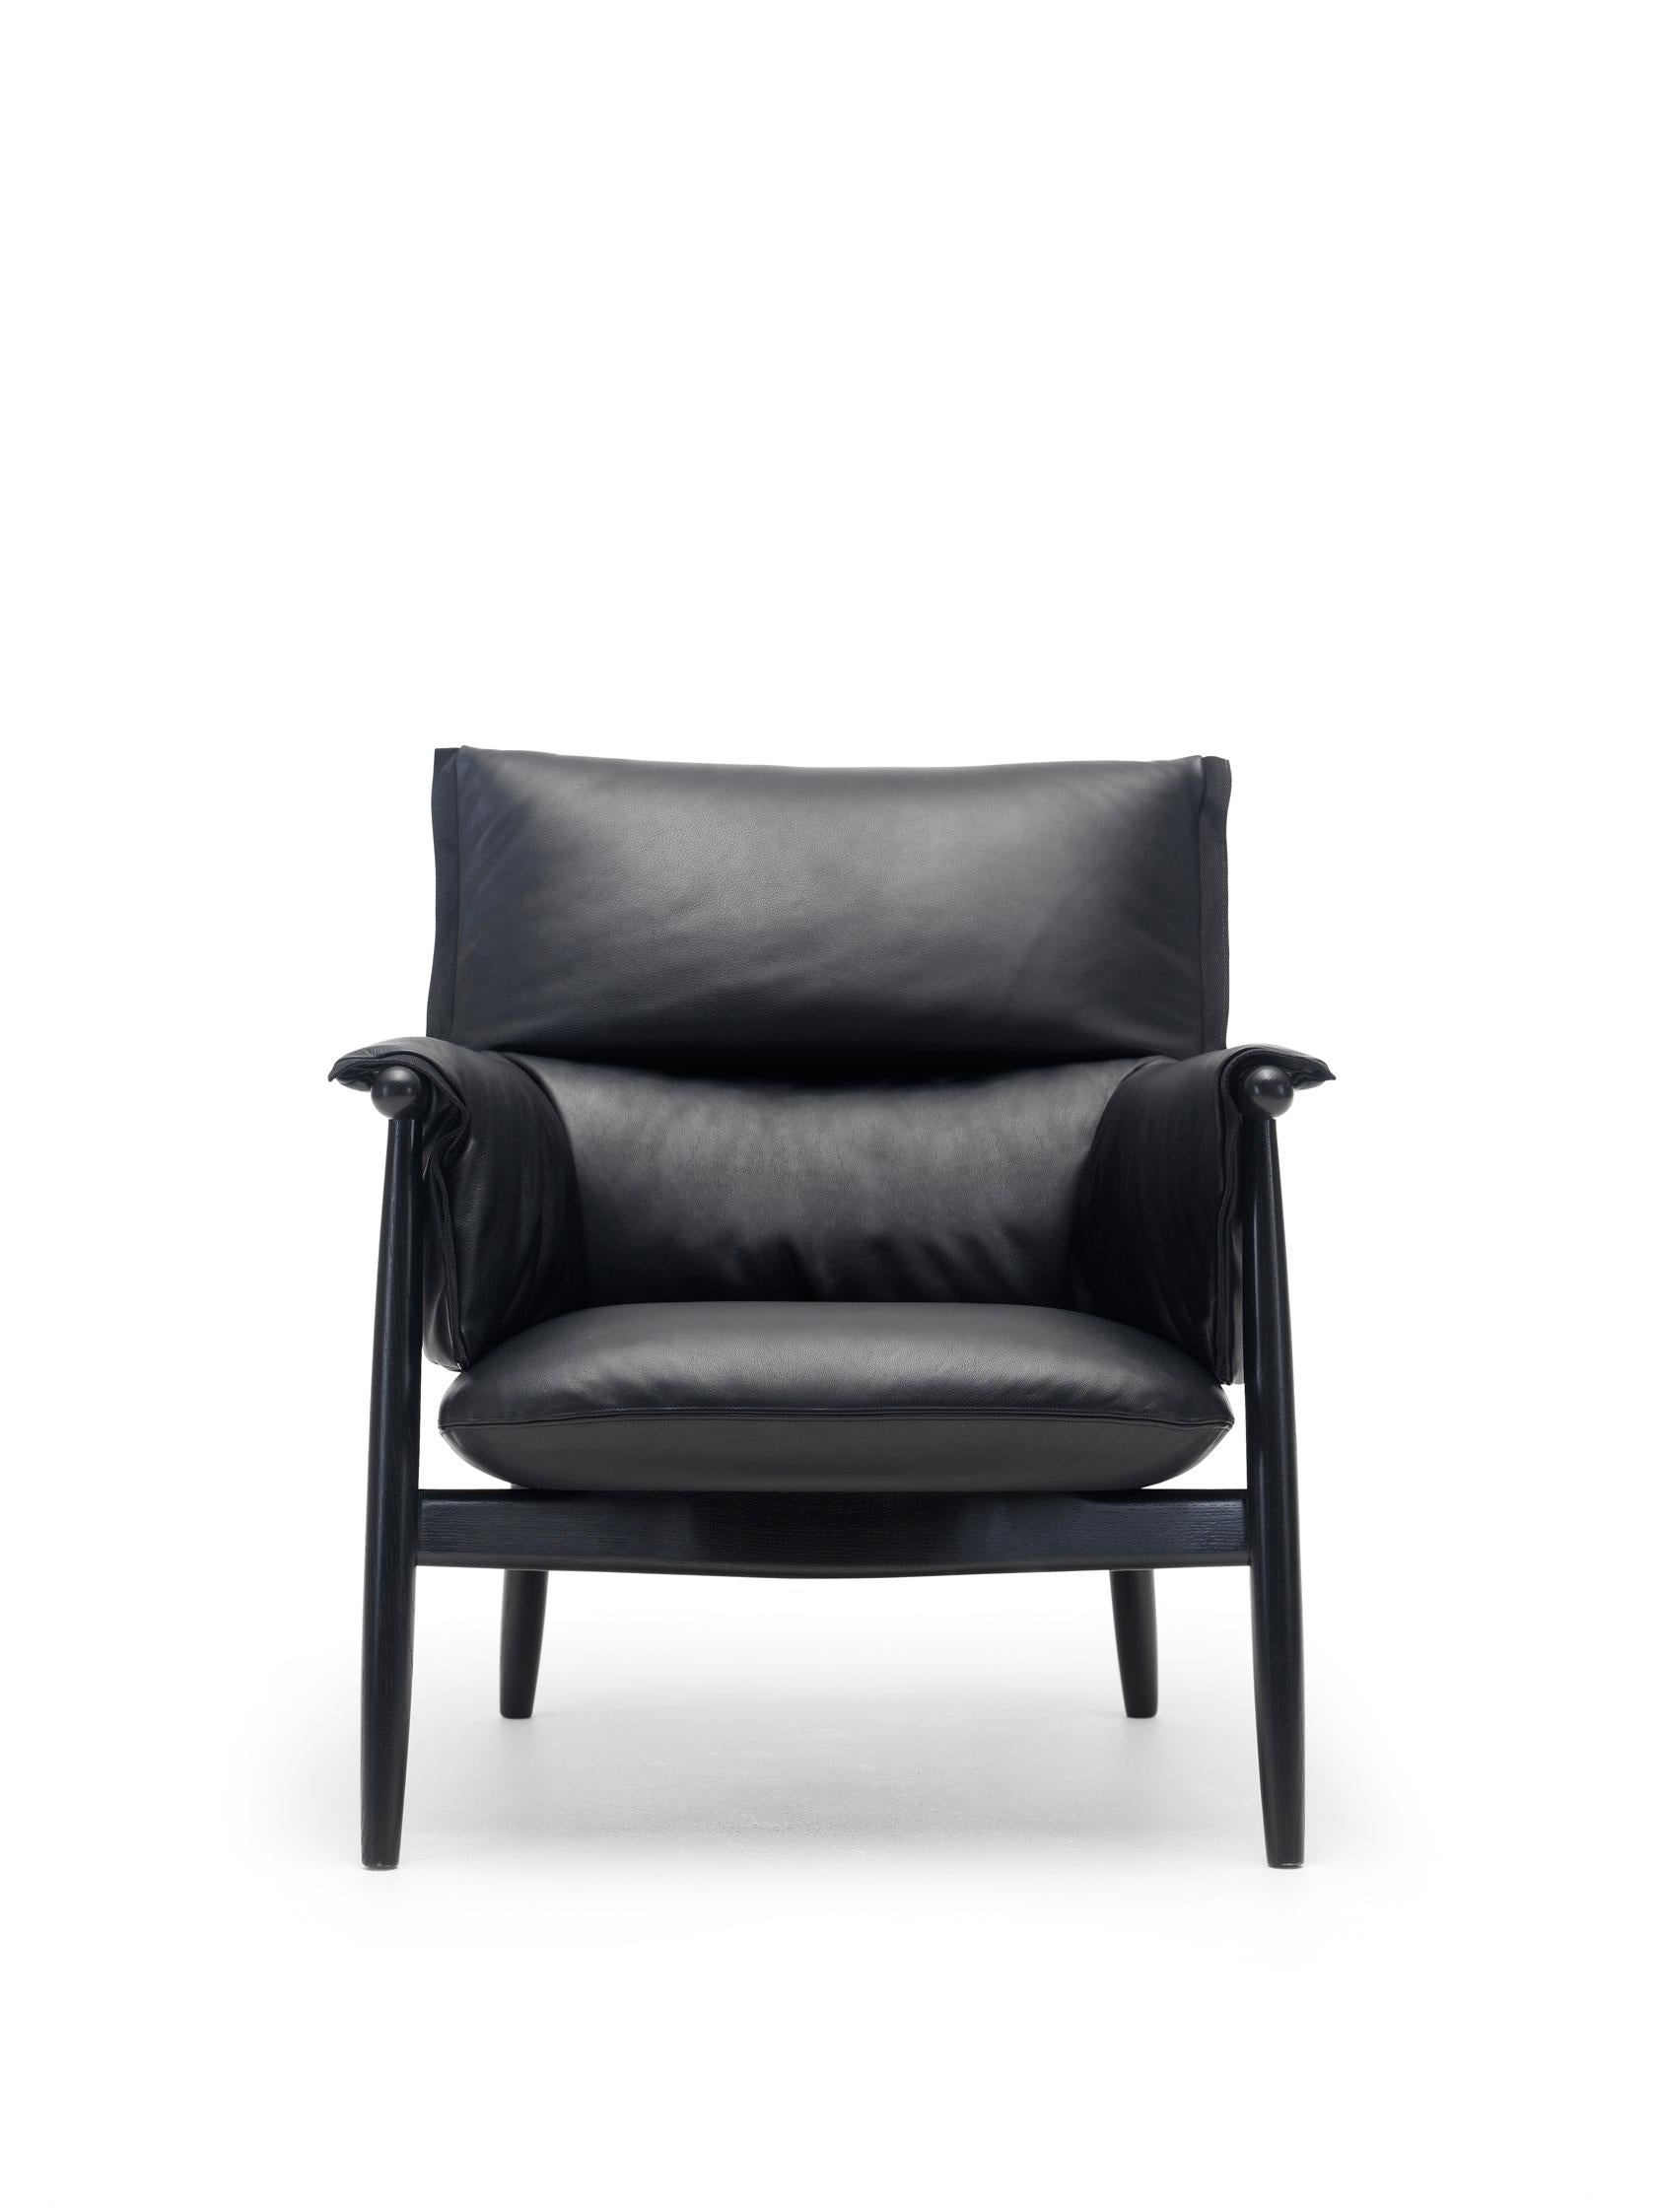 Black (Sif 98) E015 Embrace Lounge Chair in Painted Black Oak, Loke black leather, black edging